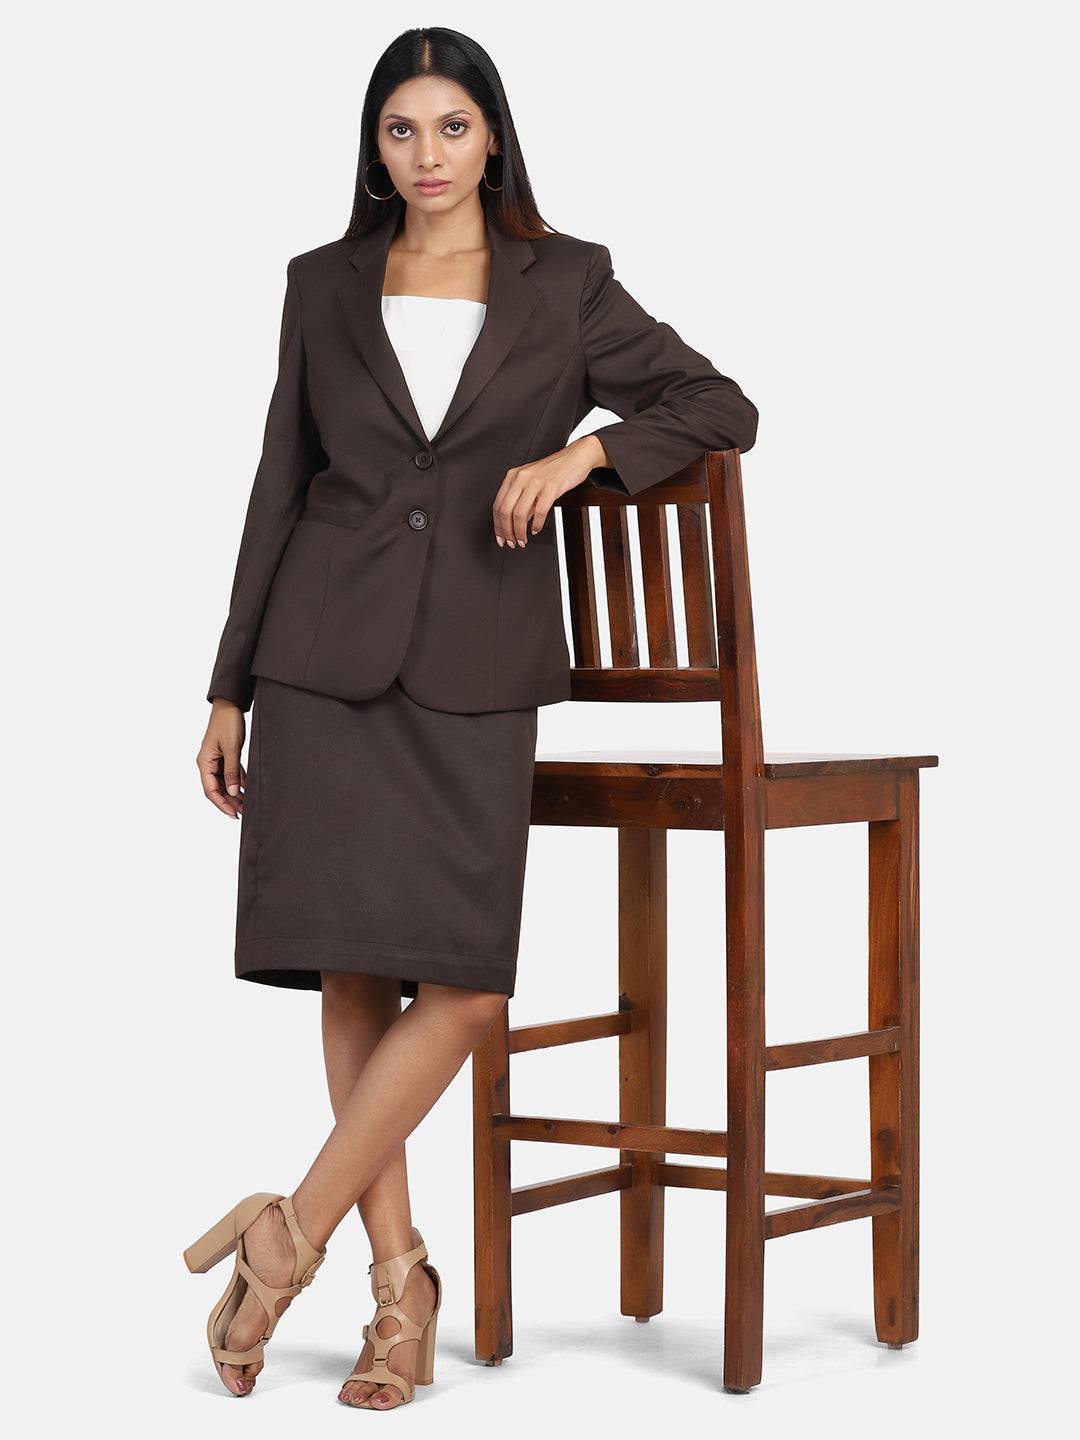 Women Suit Dress Fashion Bodycon Business Skirt Slim Hip Skirt Lapel Long  Sleeve Casual Work Formal Dress Blazer 